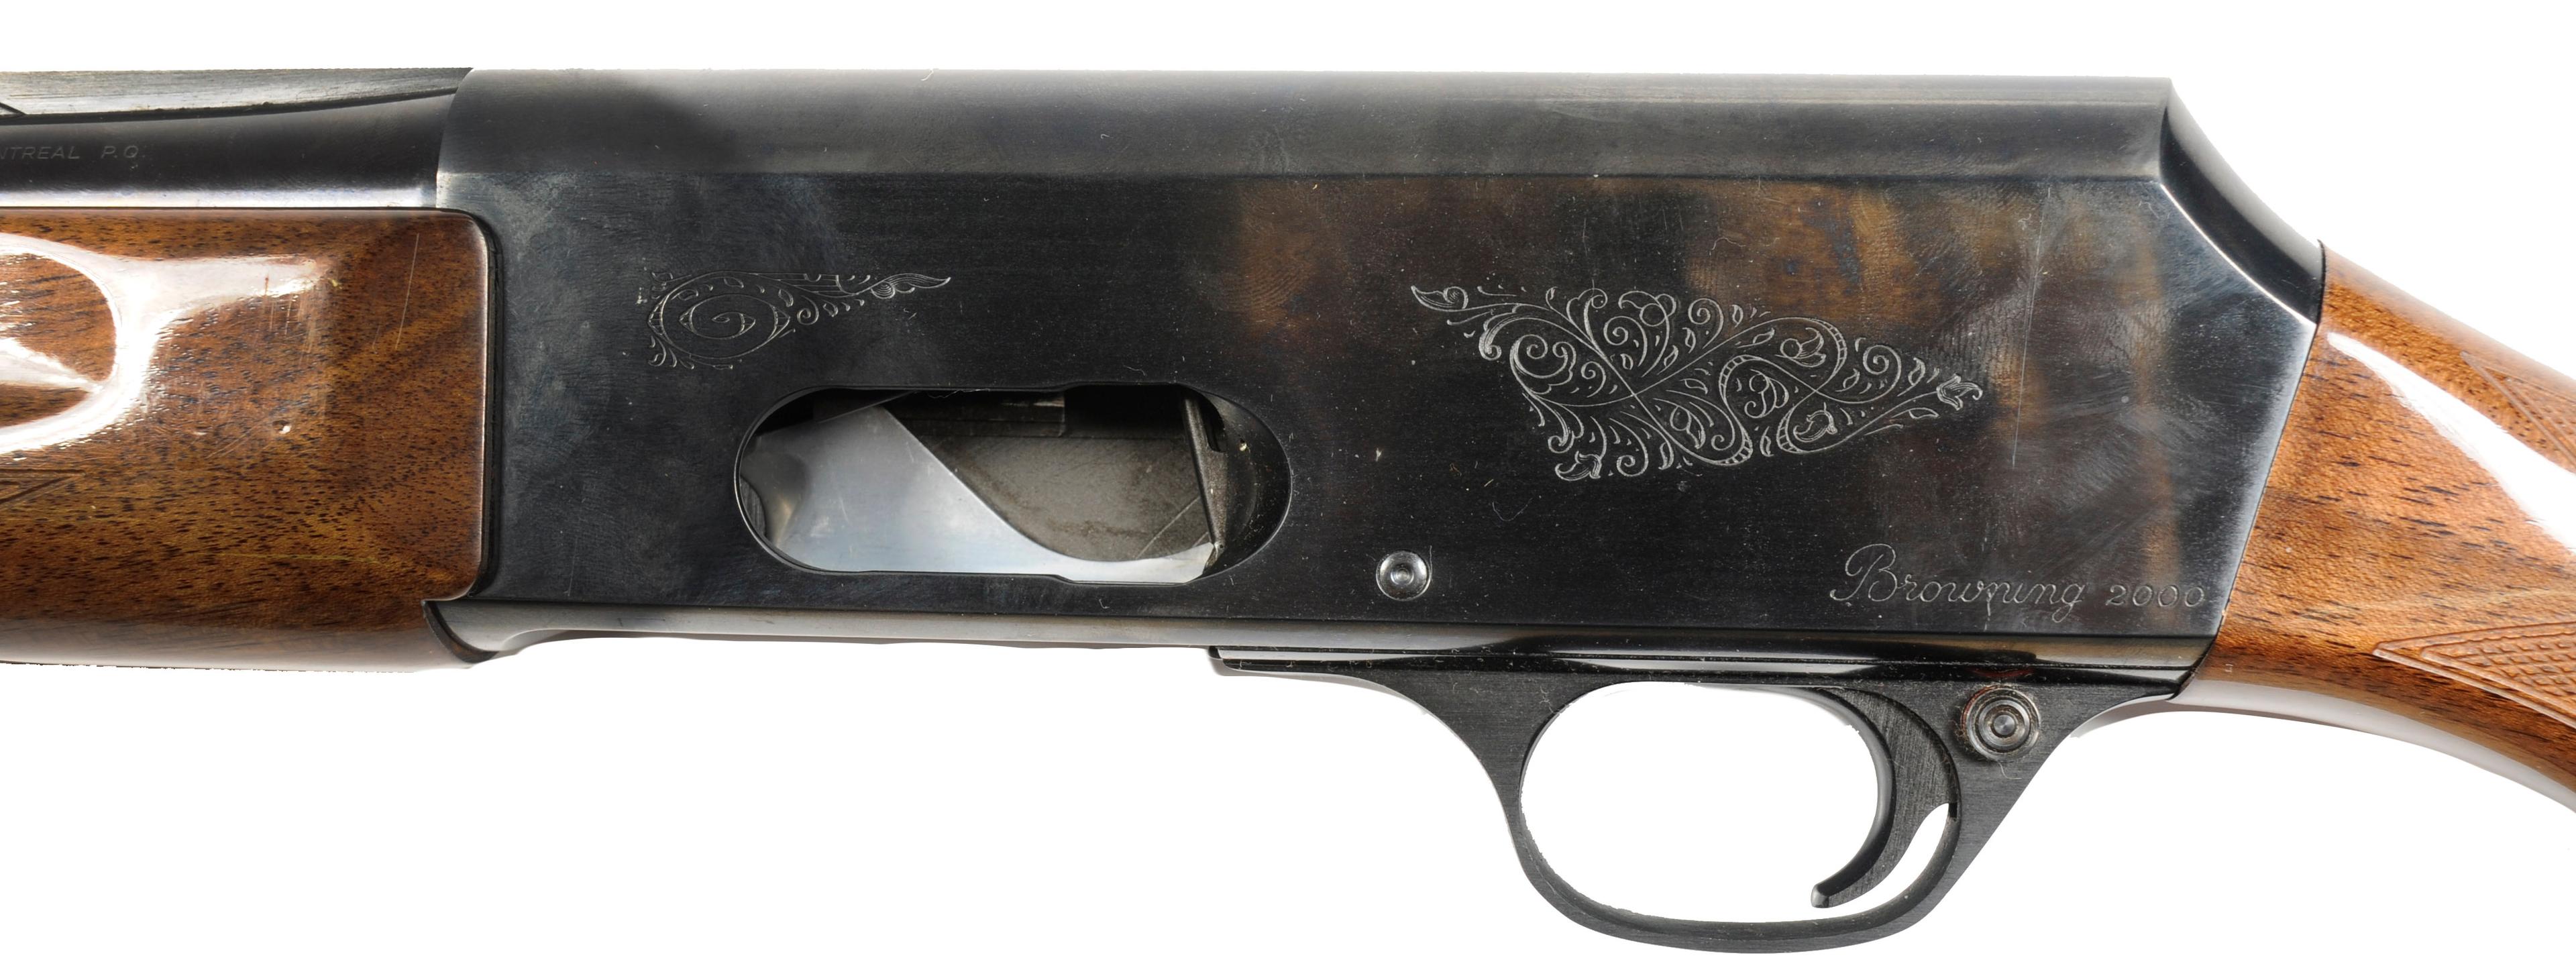 Browning Model 2000 12 Ga. Semi-Automatic Shotgun - FFL # 02657D57 (PAG 1)